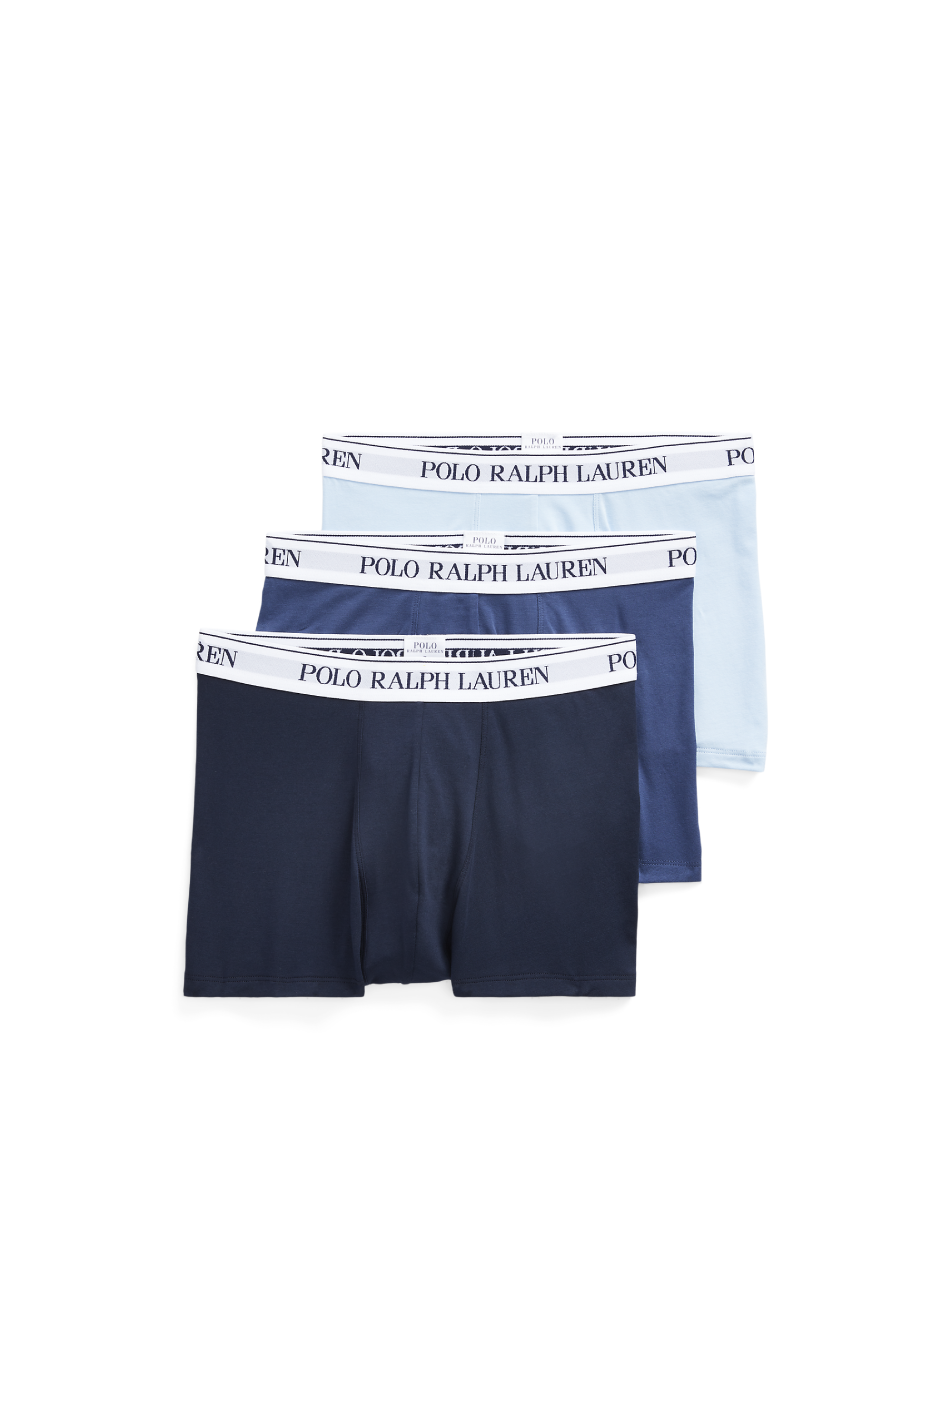 Polo Ralph Lauren Men's 3 Pack Trunk